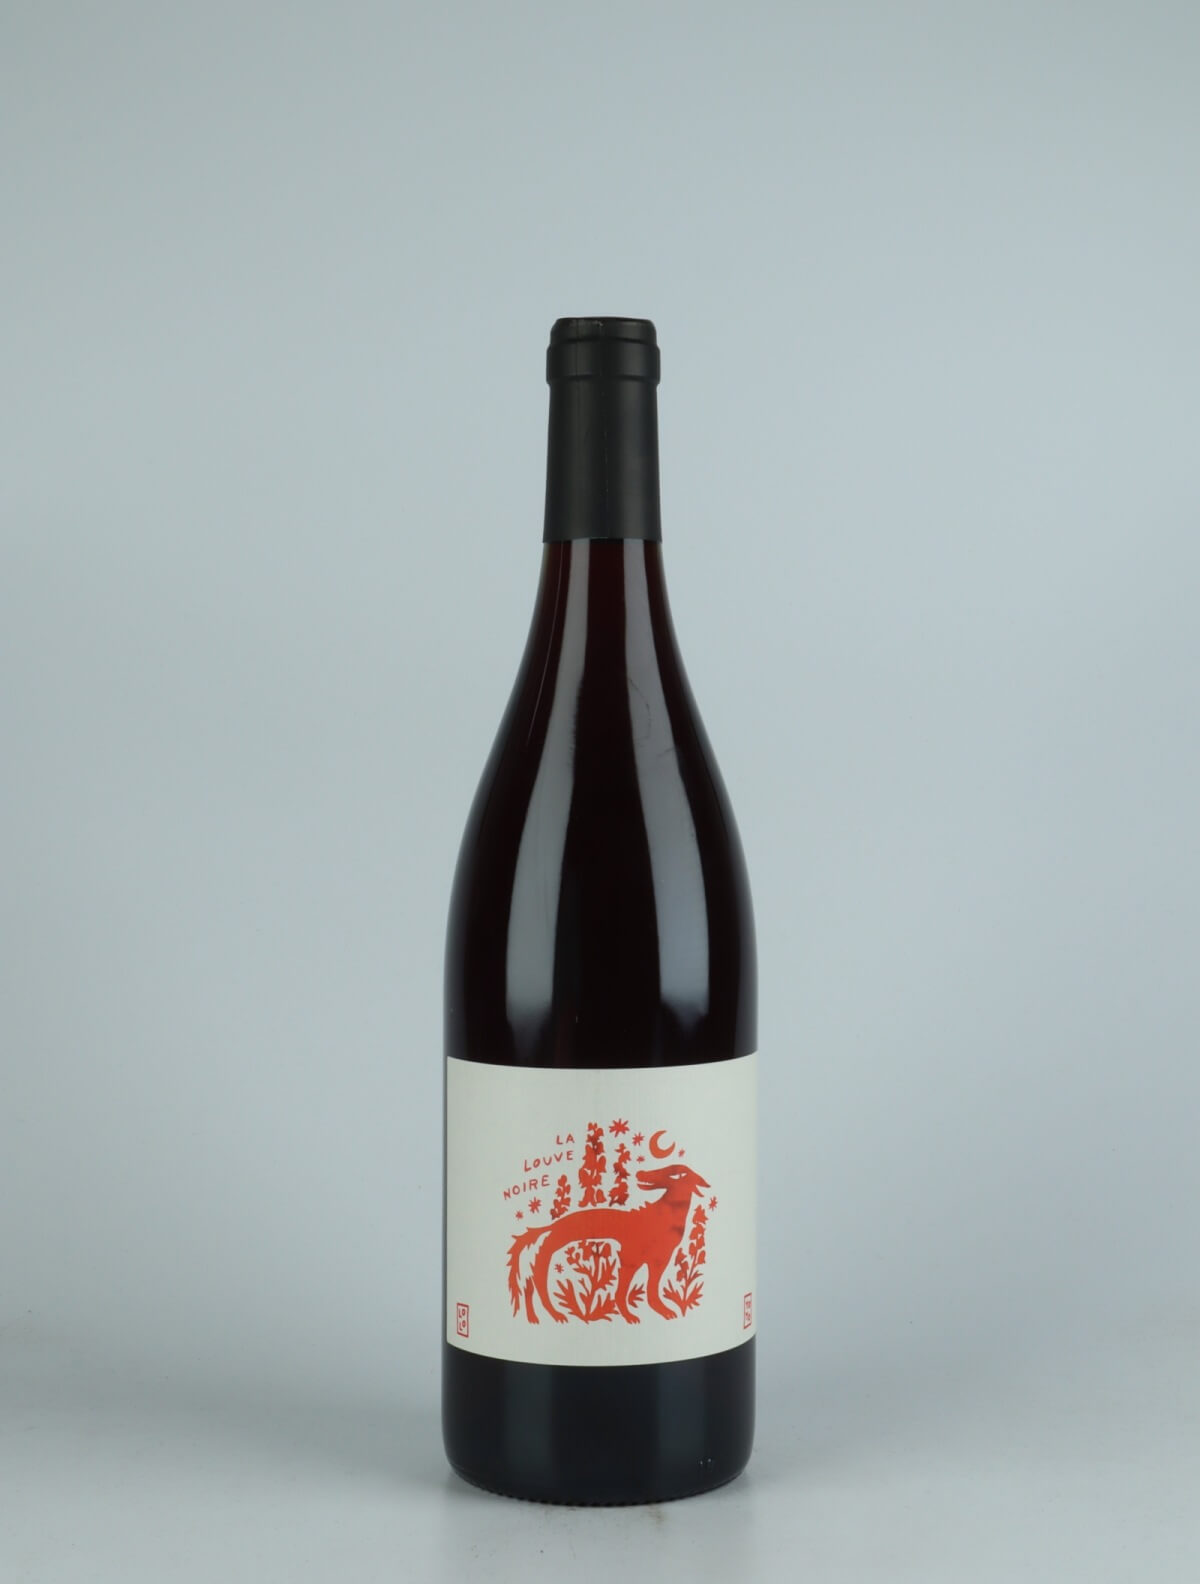 A bottle 2021 La Louve Noire Red wine from Domaine Yoyo, Rousillon in France